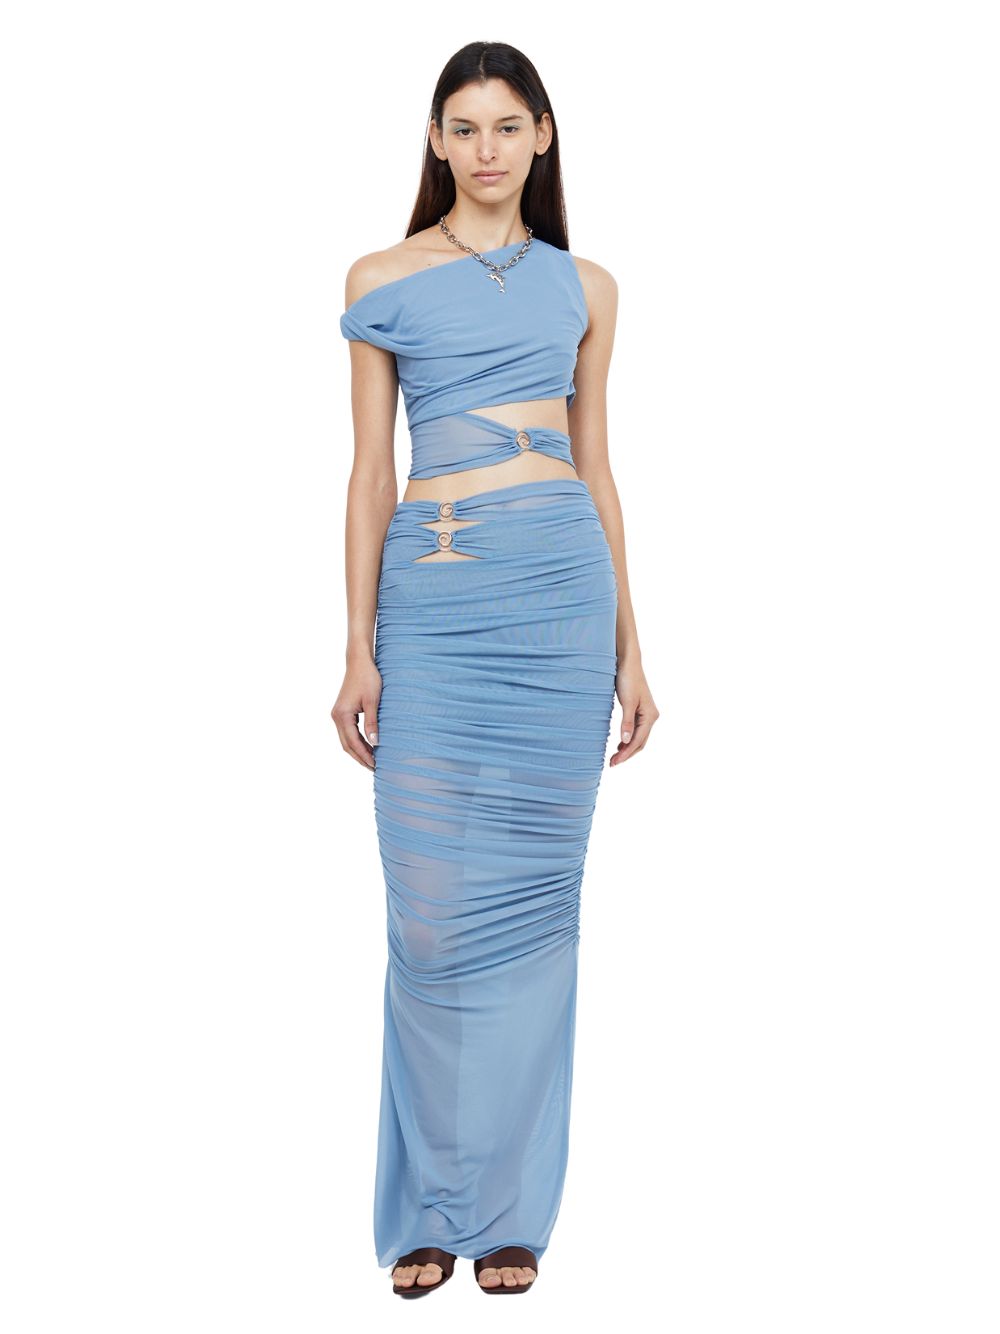 Whorl Asym Maxi Dress (Meridian Blue)